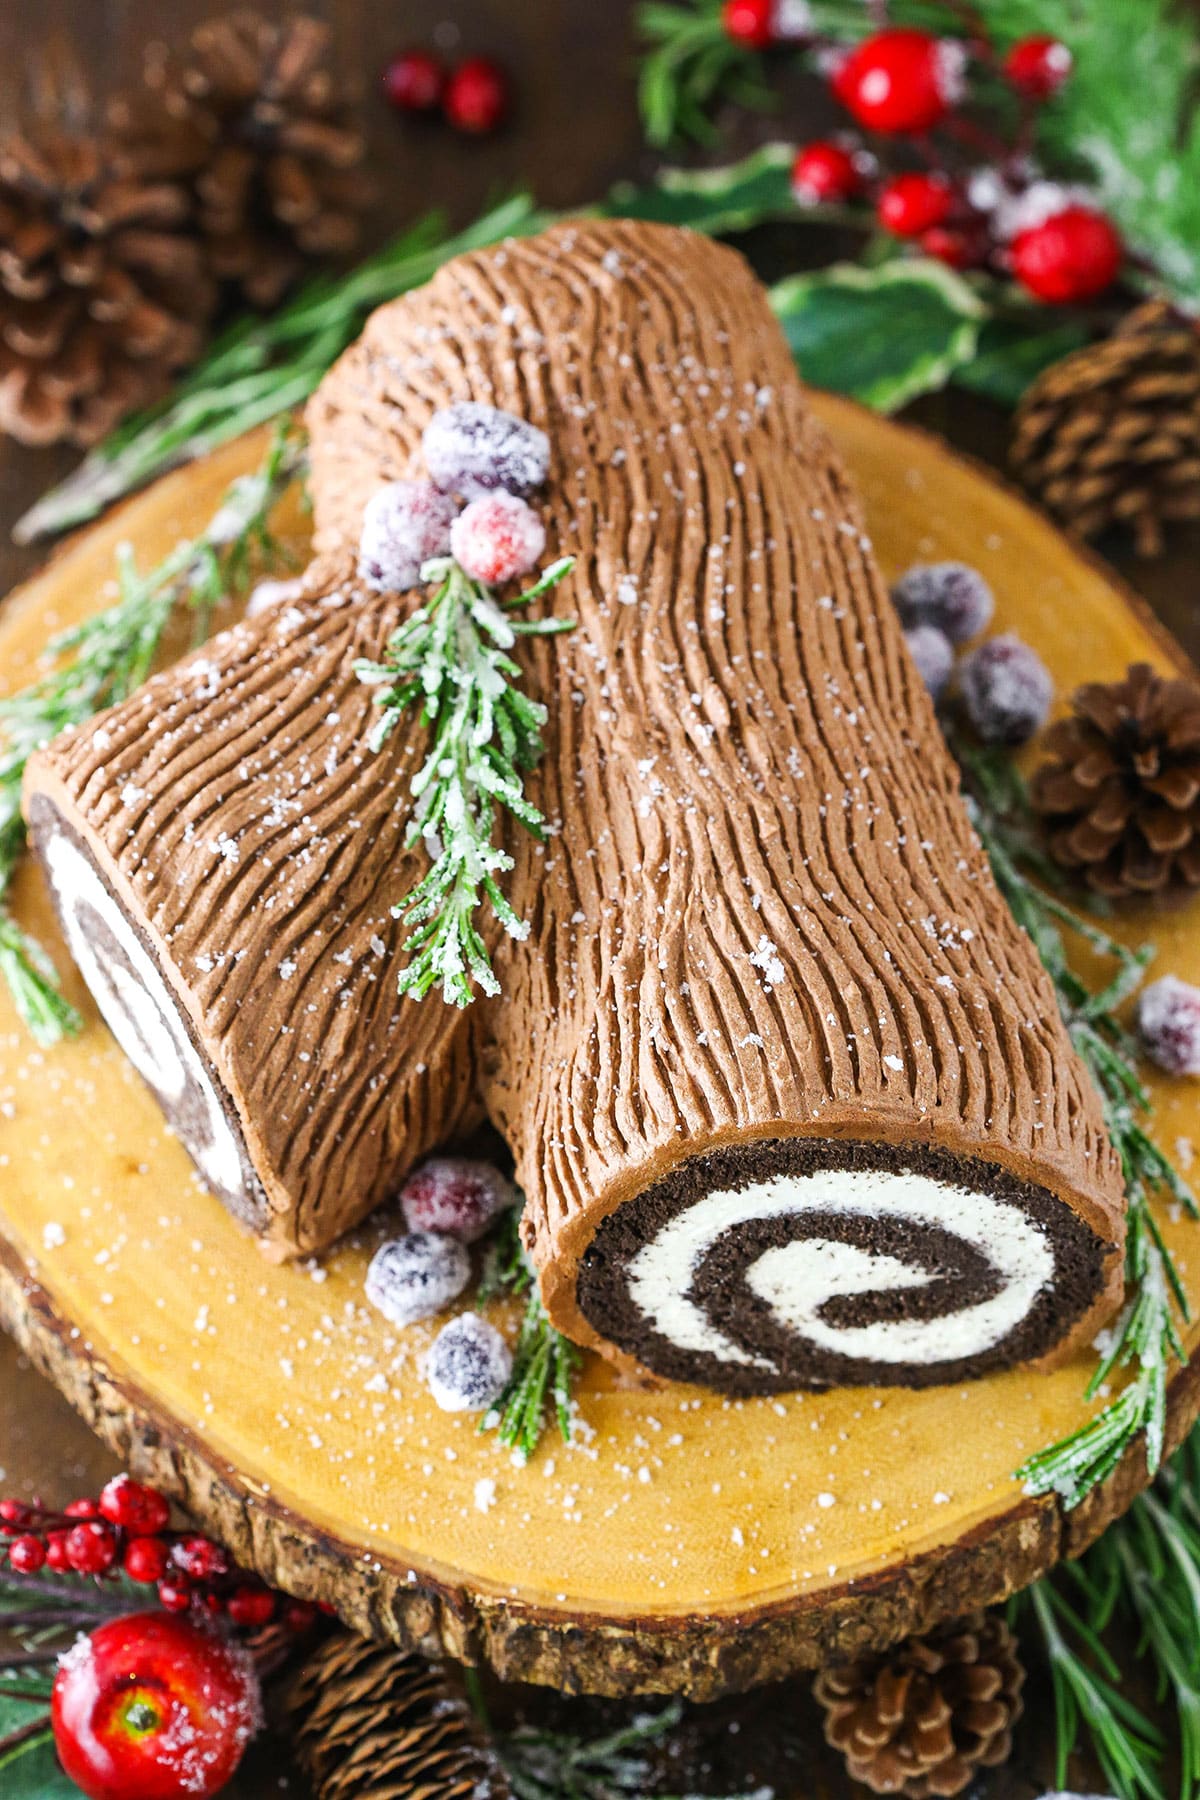 Holiday Yule Log Cake (Bûche de Noël) - Out of the Box Baking